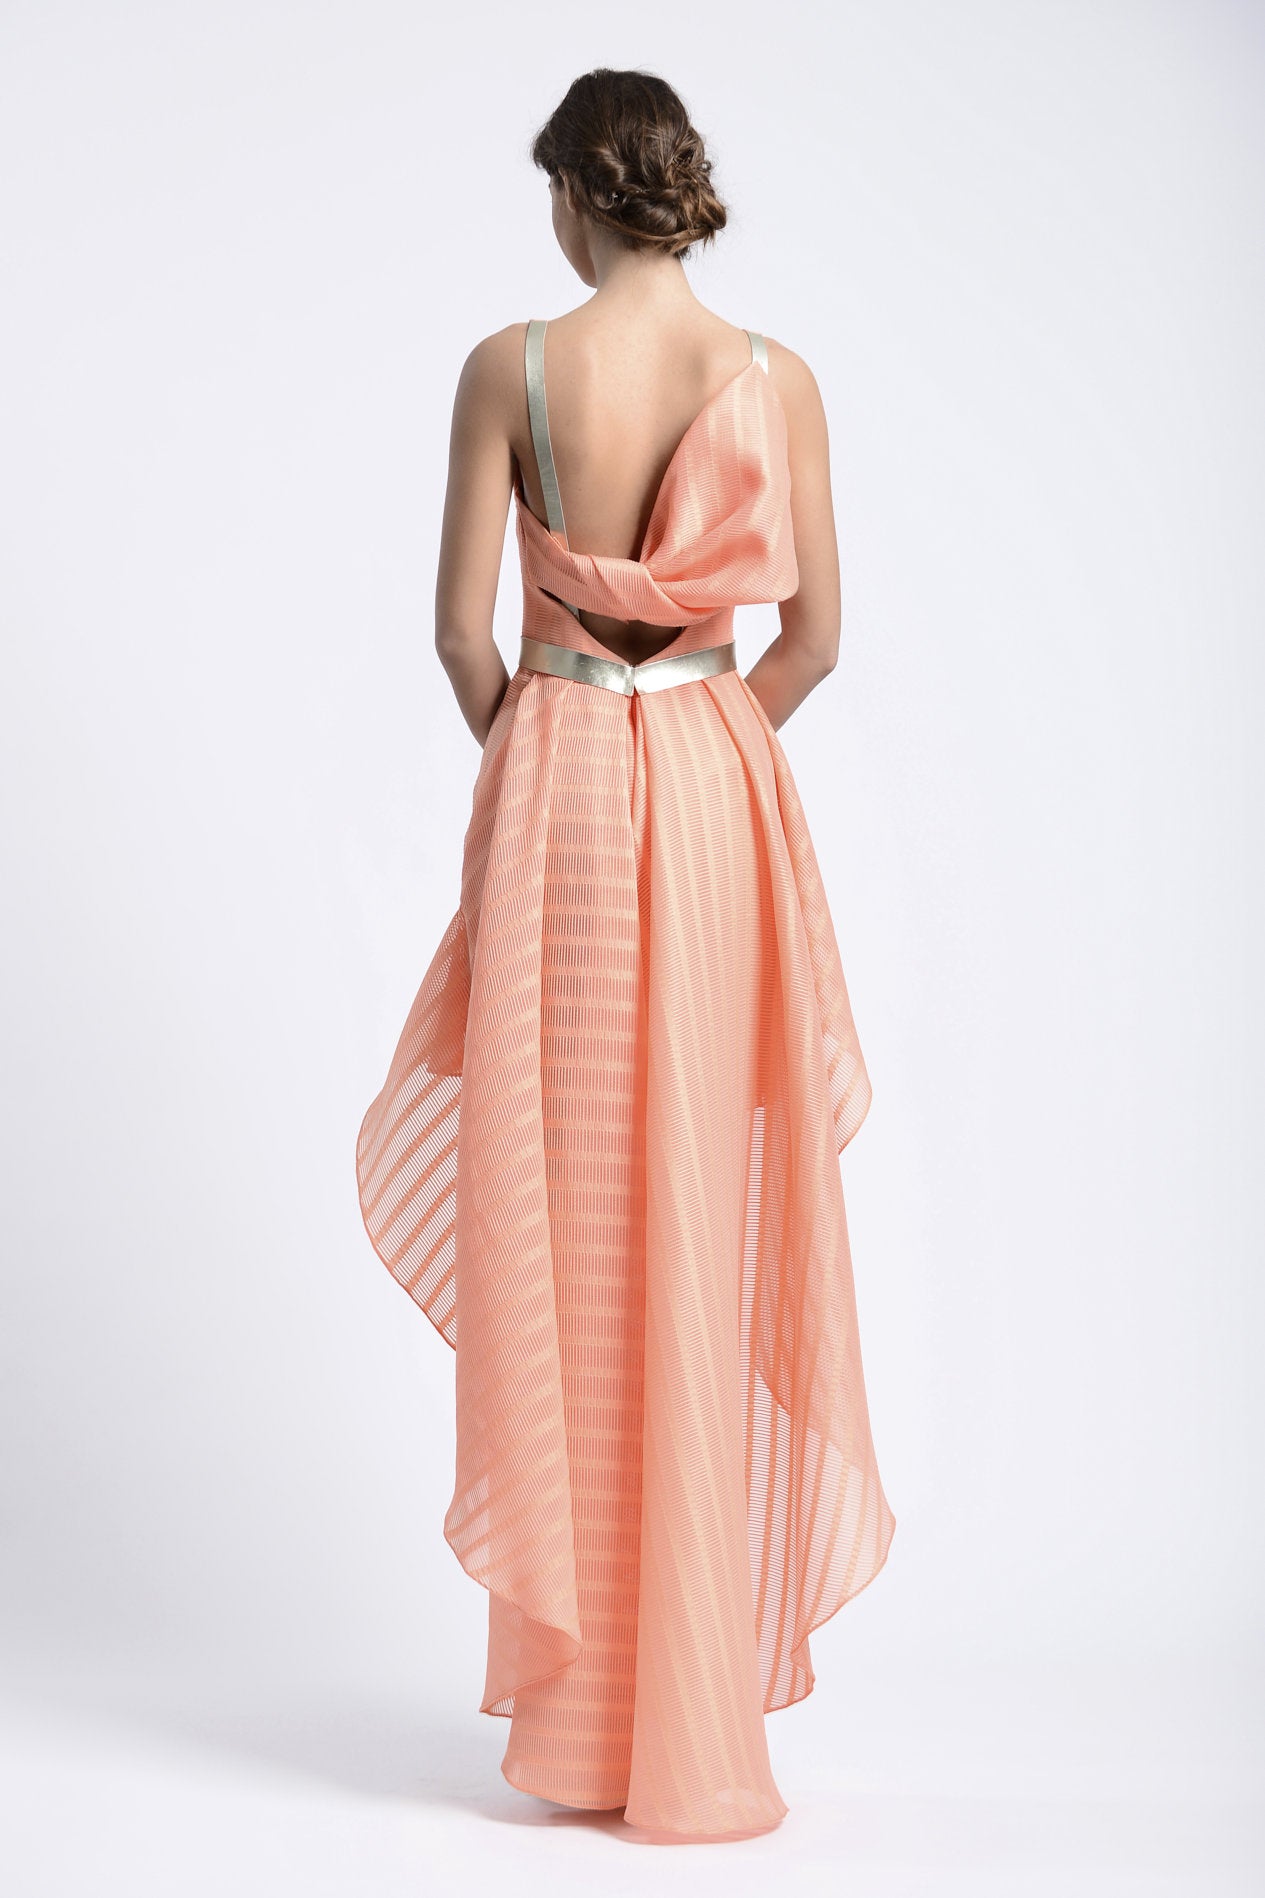 Gemy Maalouf Classy Peach Gown - Rofial Beauty